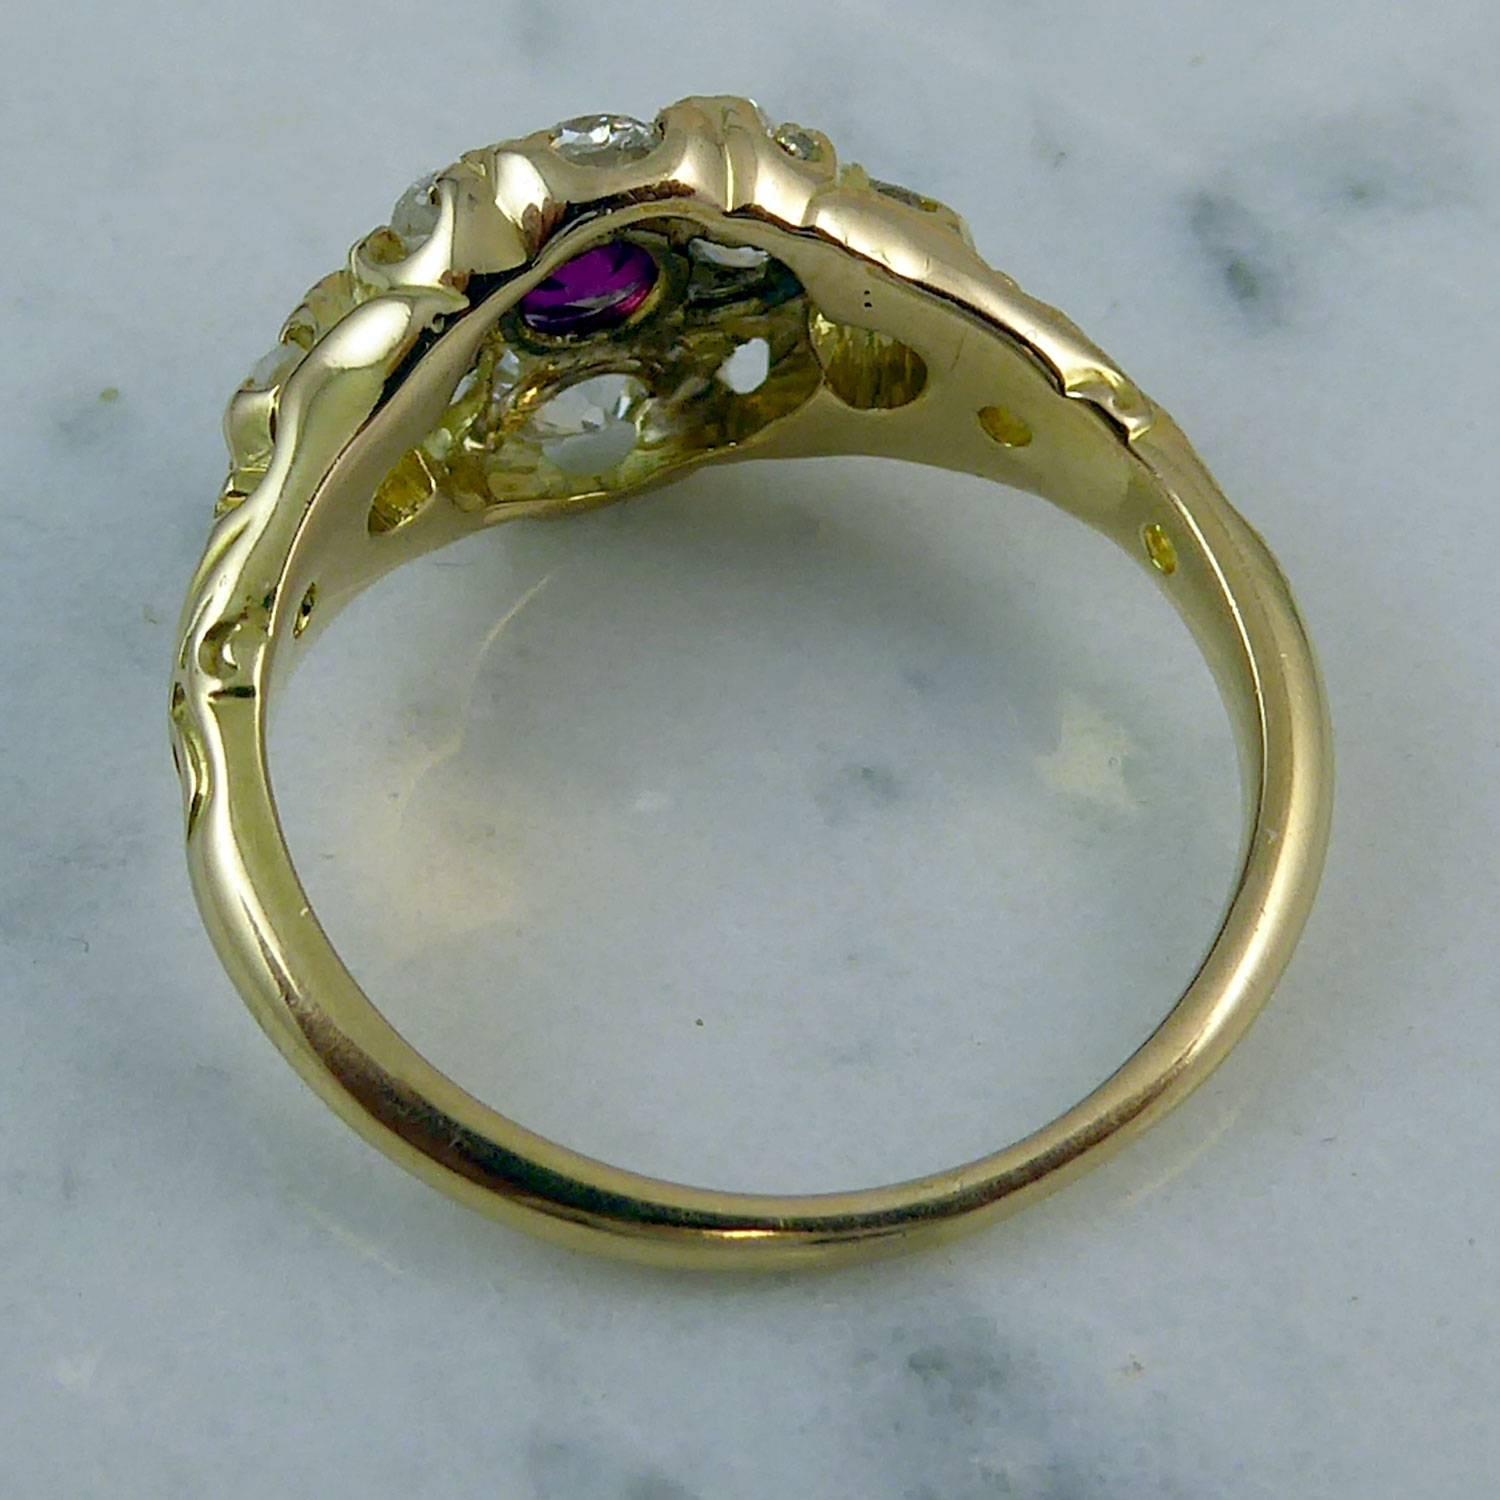 Edwardian Ruby Diamond Cluster Ring, Yellow Gold, circa 1900-1910 3